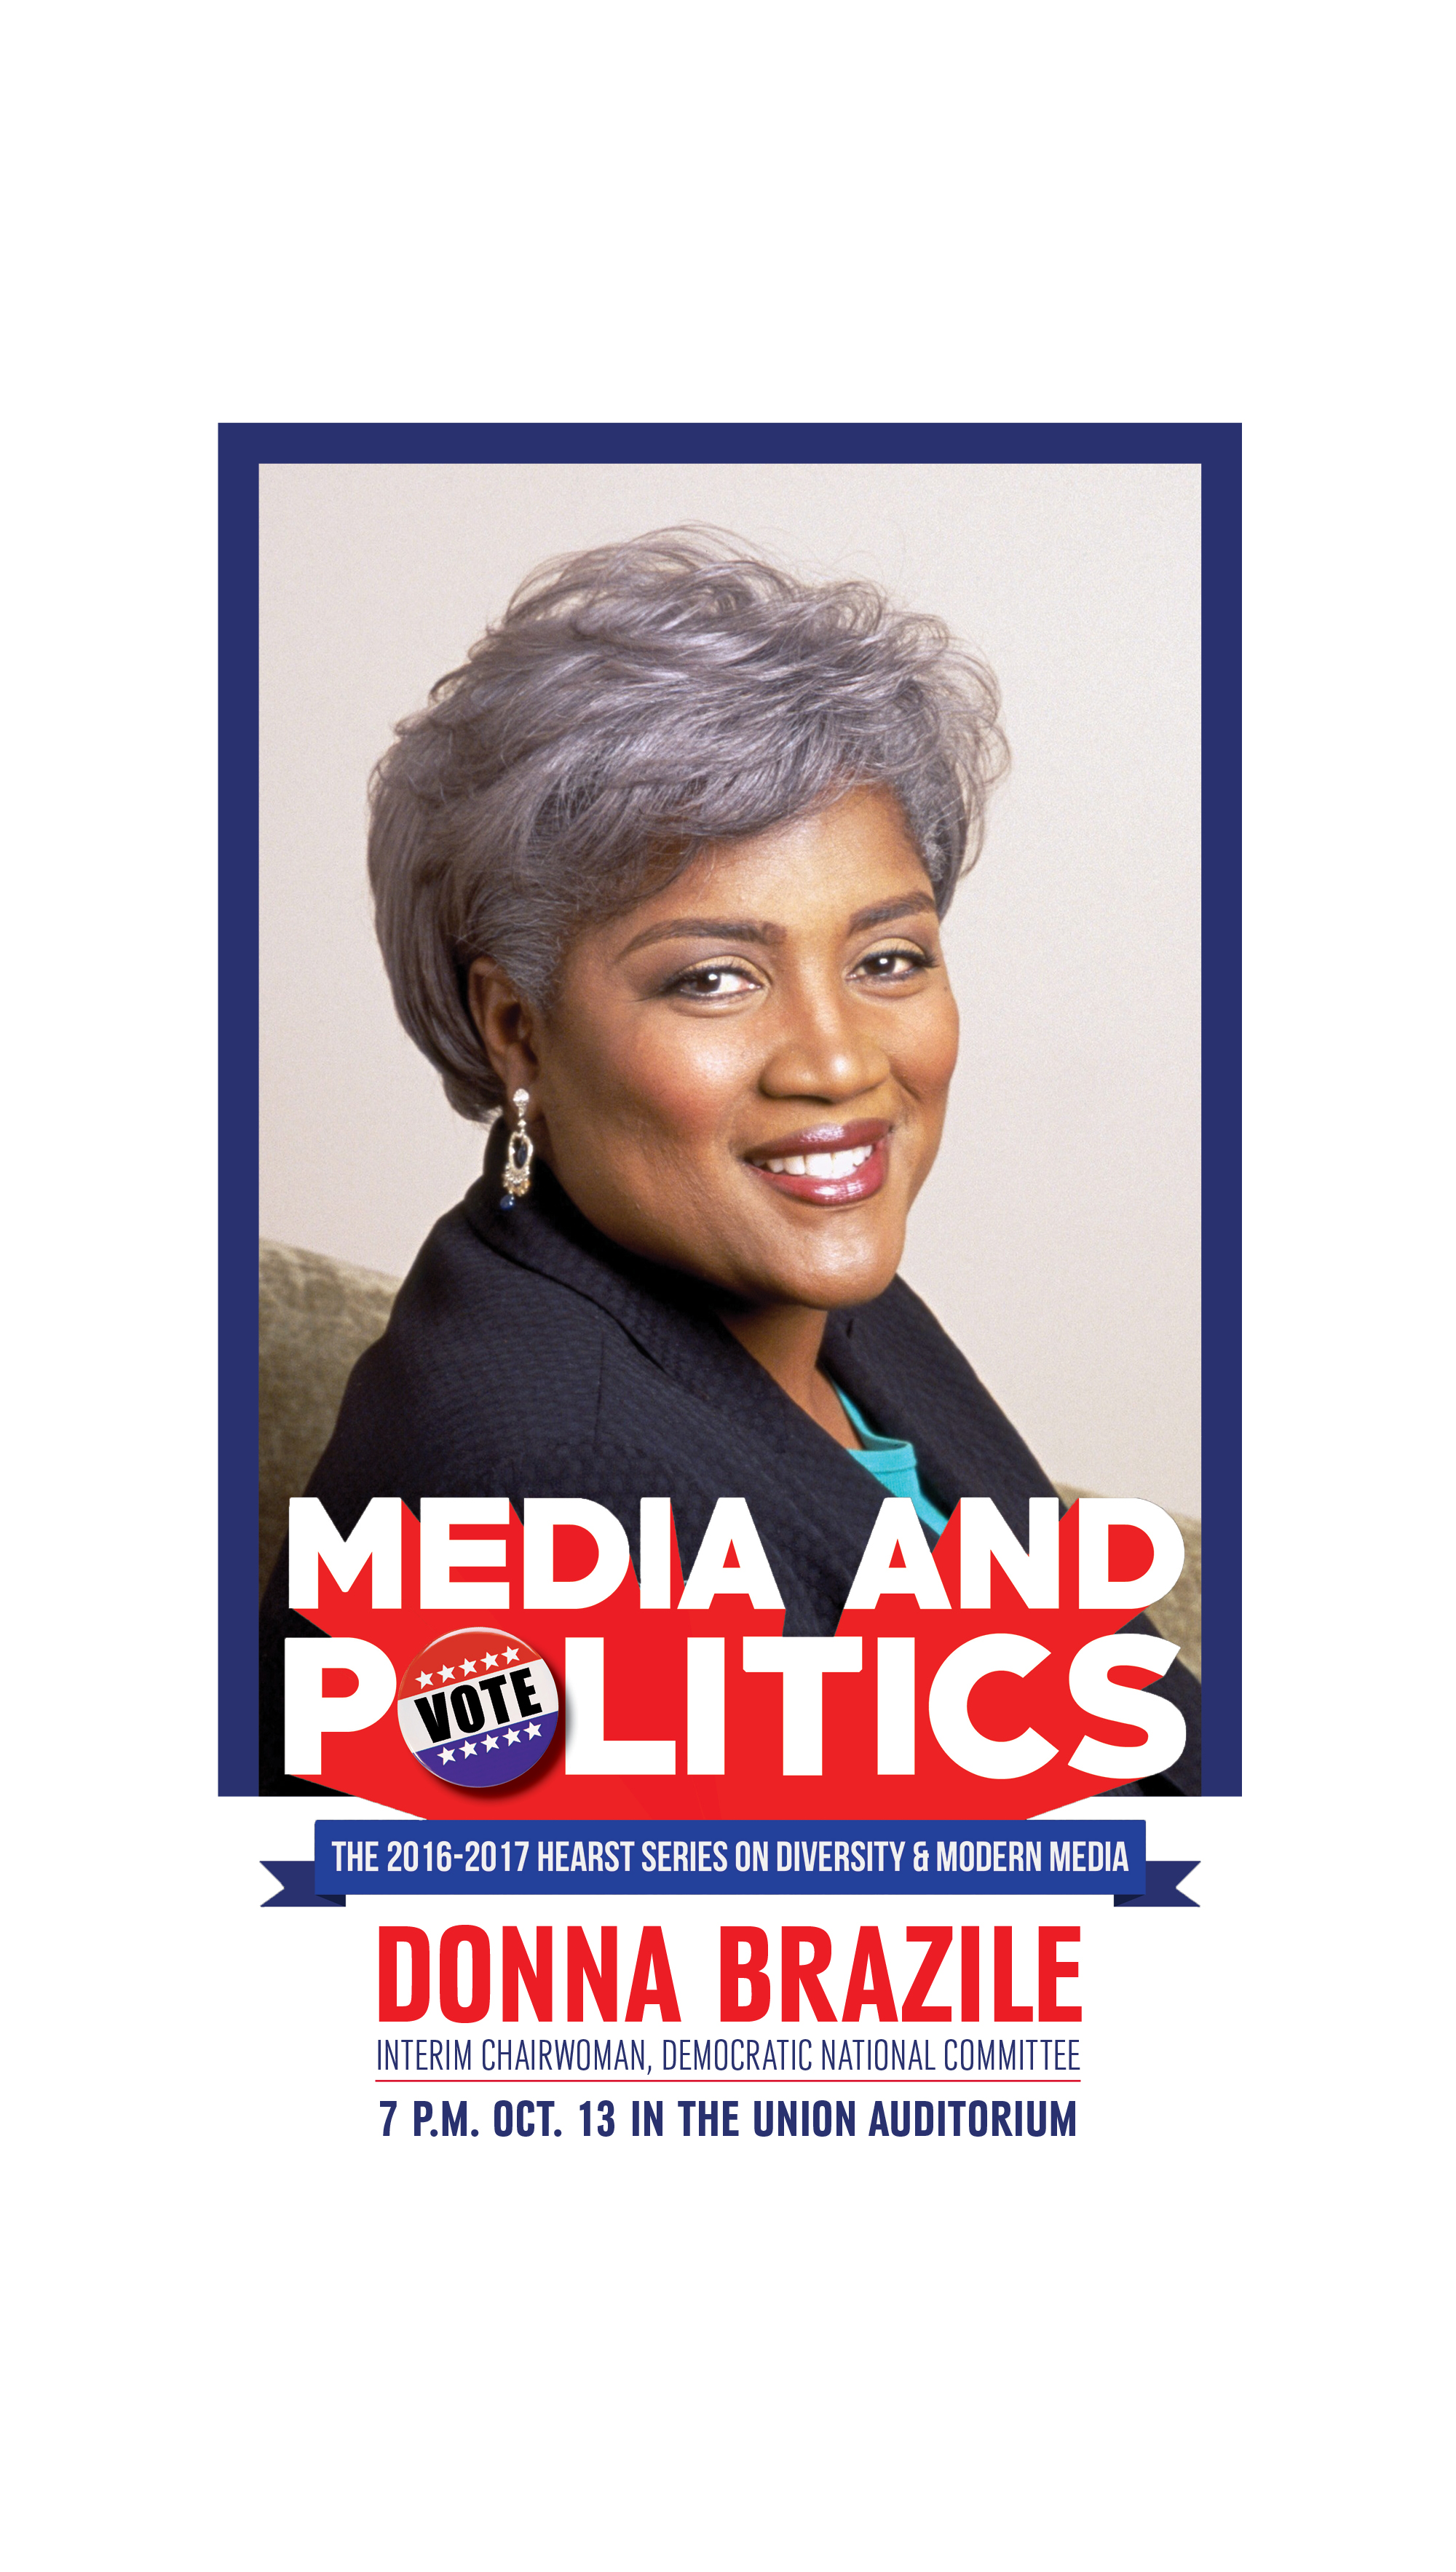 Democratic Natioinal Committee Interim Chairperson Donna Brazile